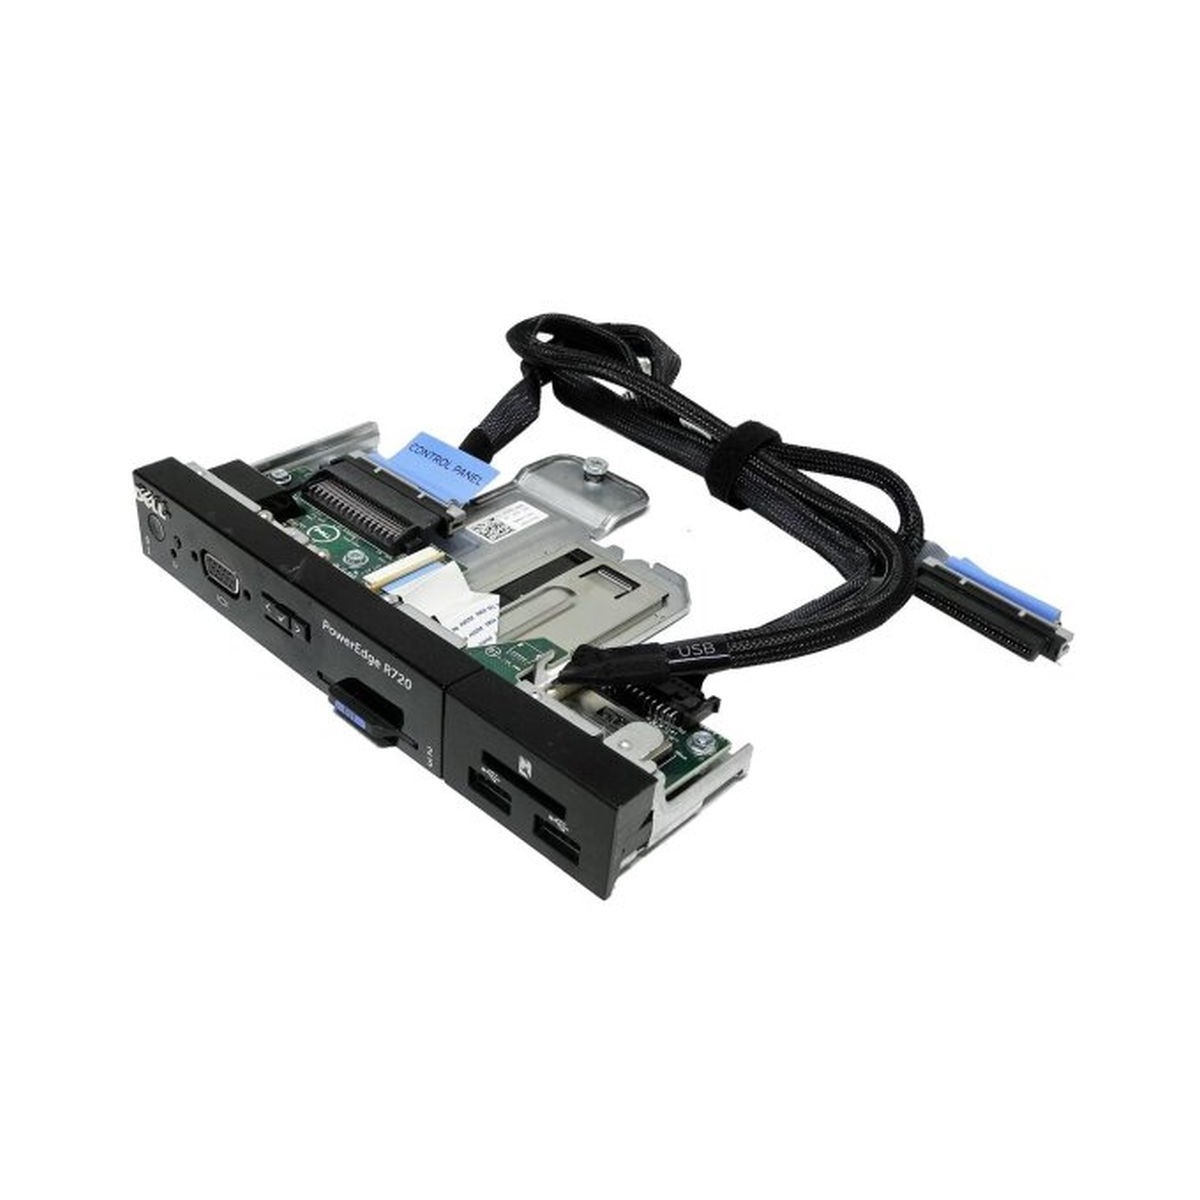 FRONT CONTROL PANEL I/O DELL R720 USB VGA 0X1H10